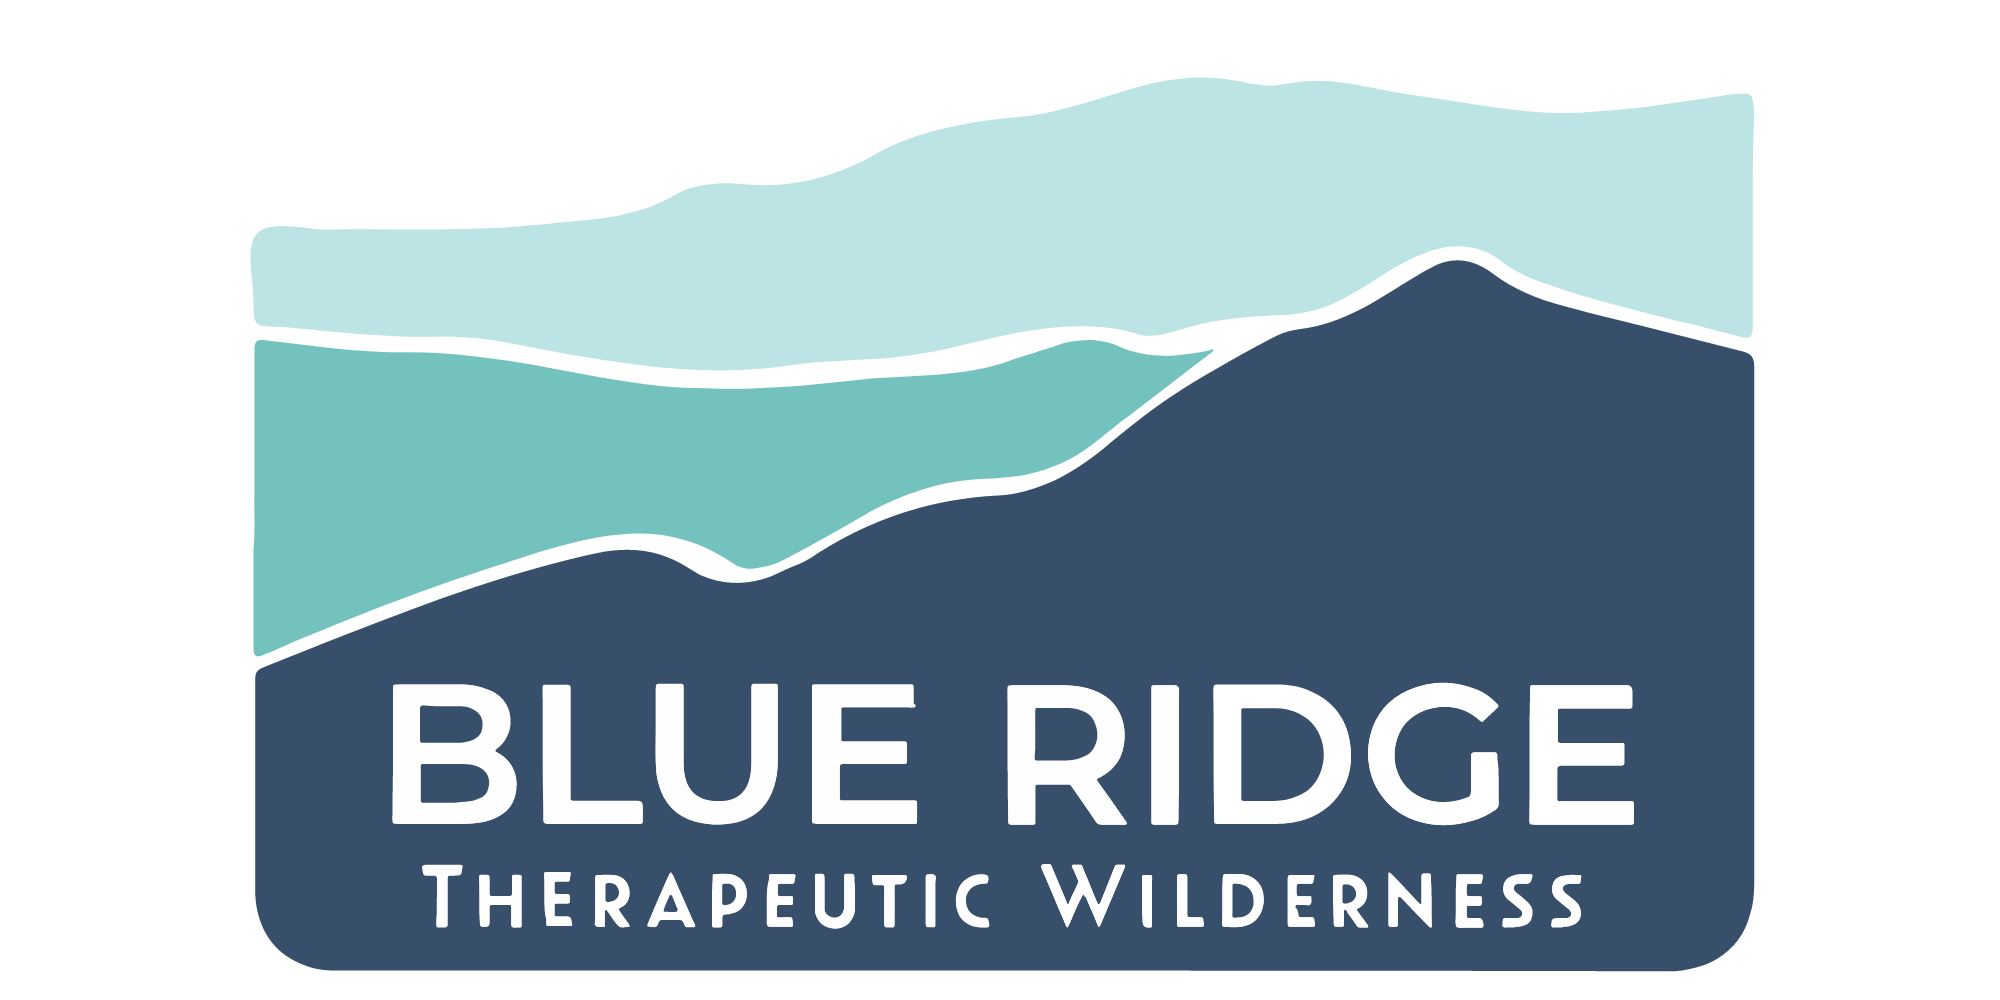 Blue ridge therapeutic wilderness logo